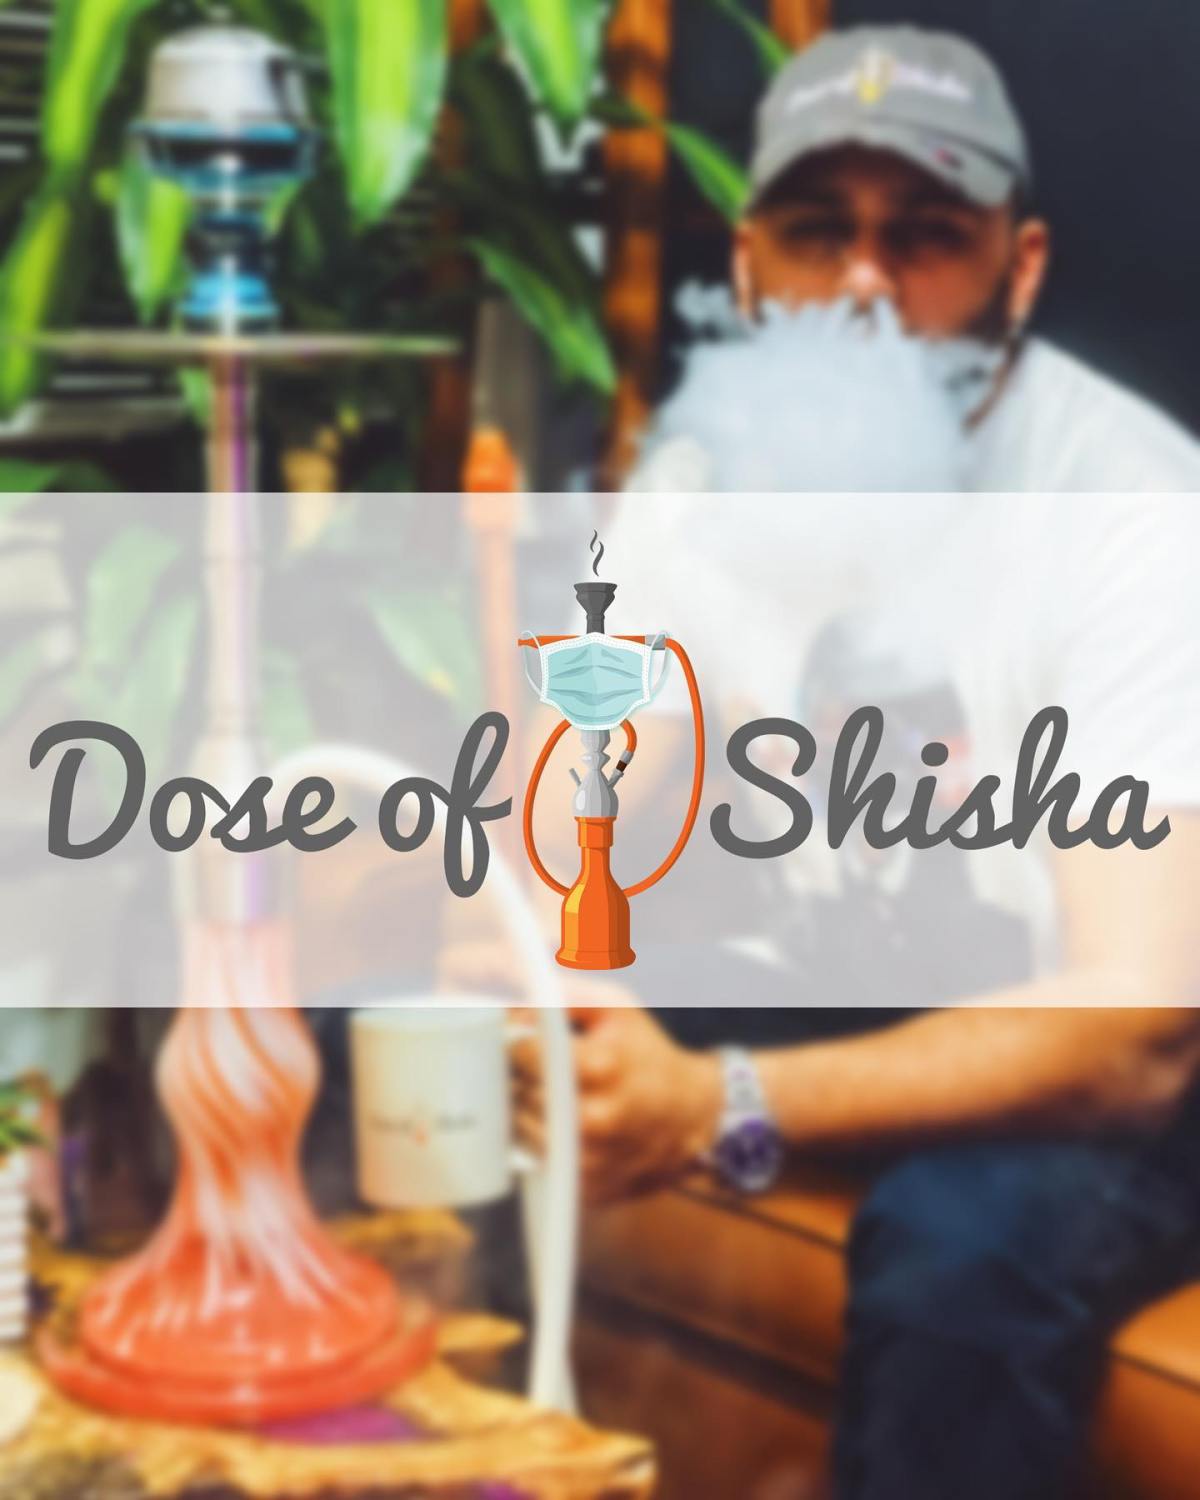 Q&A With Sal Khan (Dose Of Shisha)